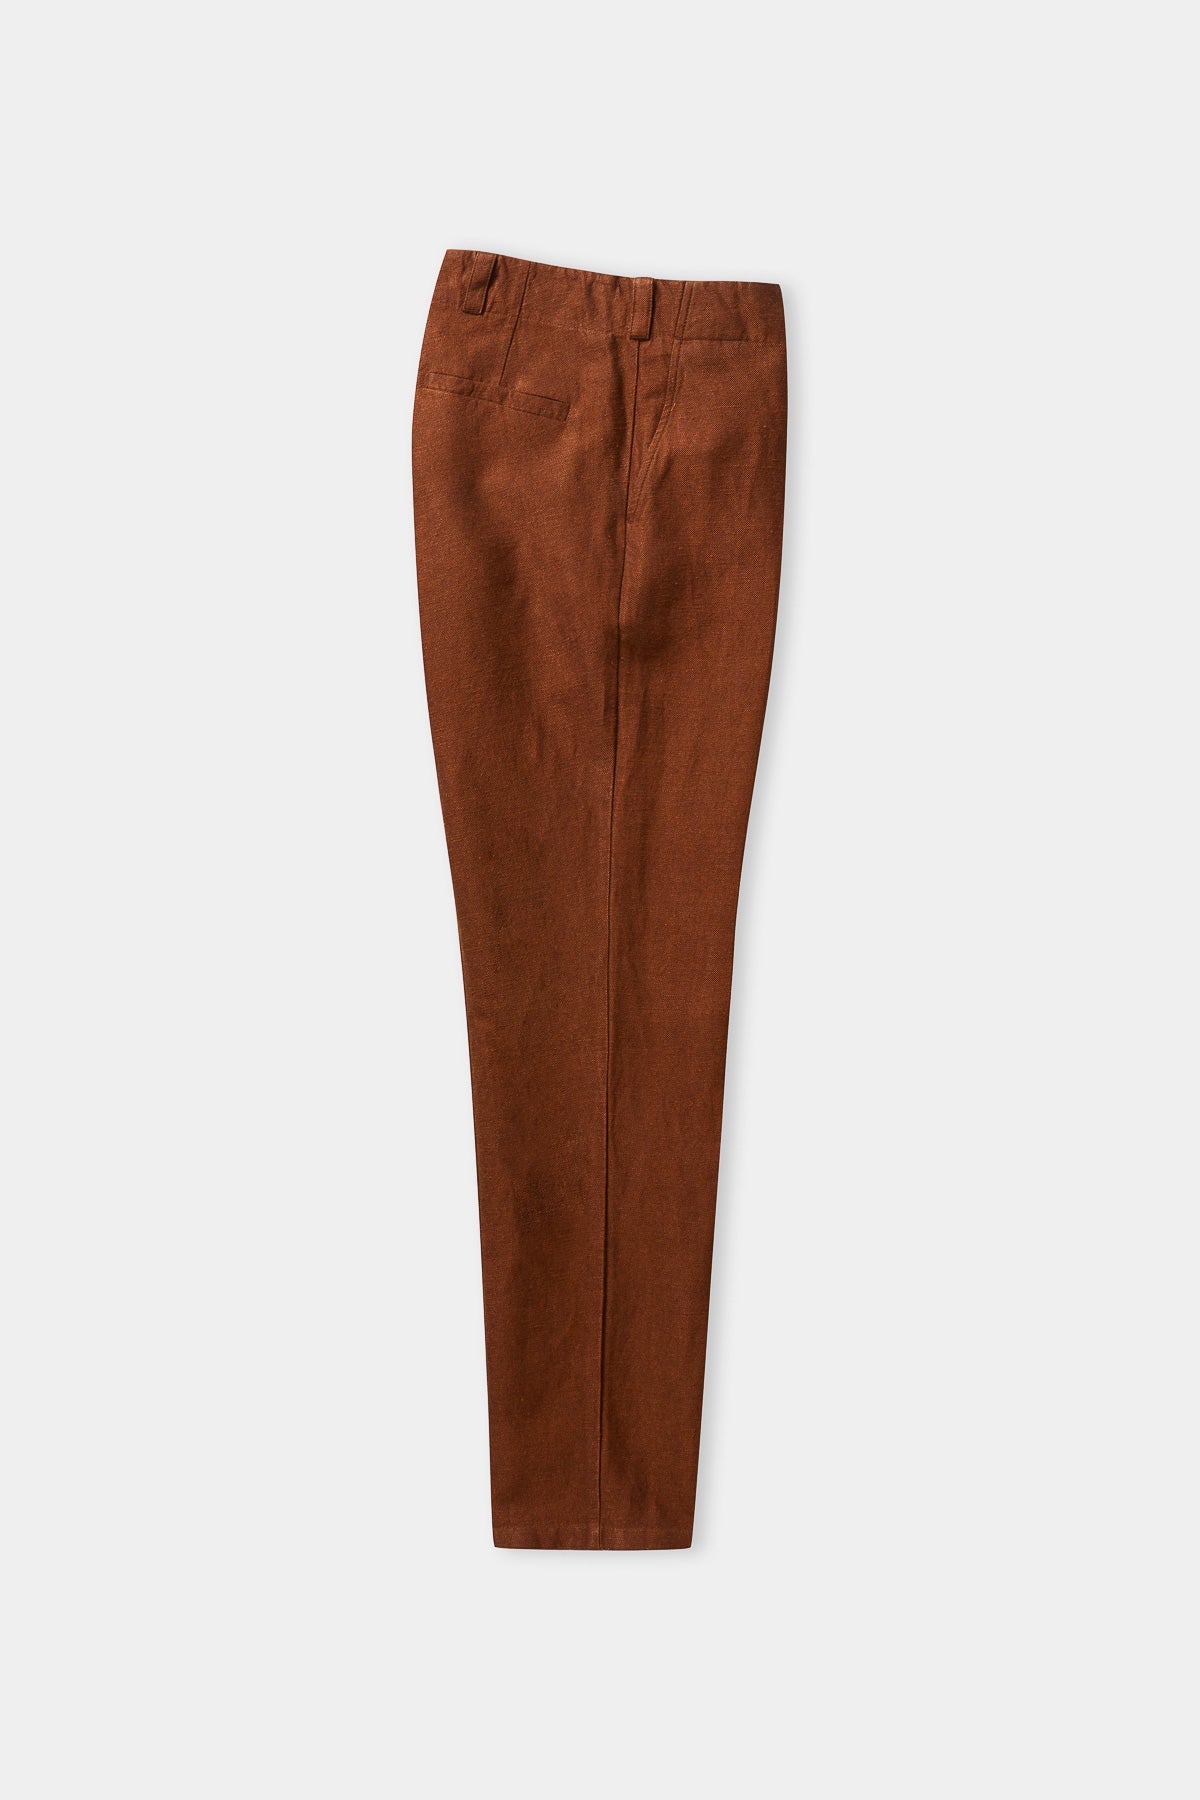 JOSTHA trousers cognac winter linen